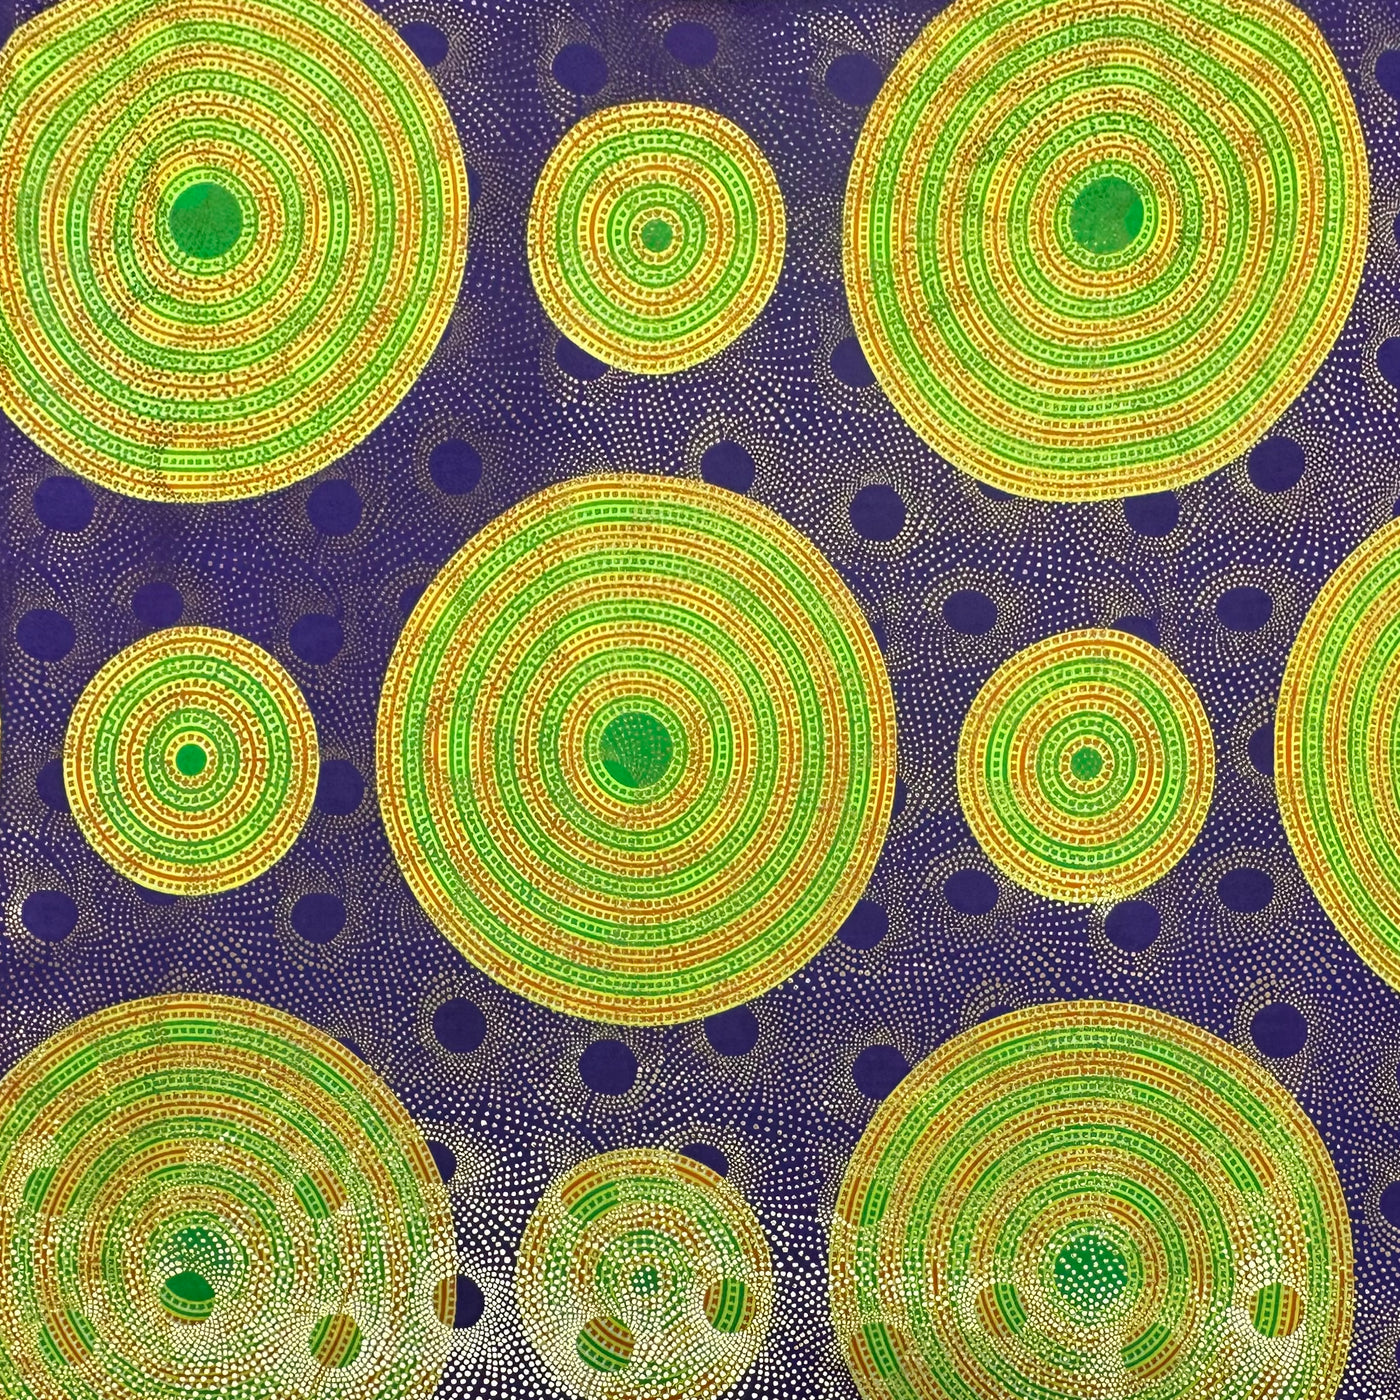 African Printed Cotton - Circles - Metallic Gold/Purple/Yellow/Green/Red